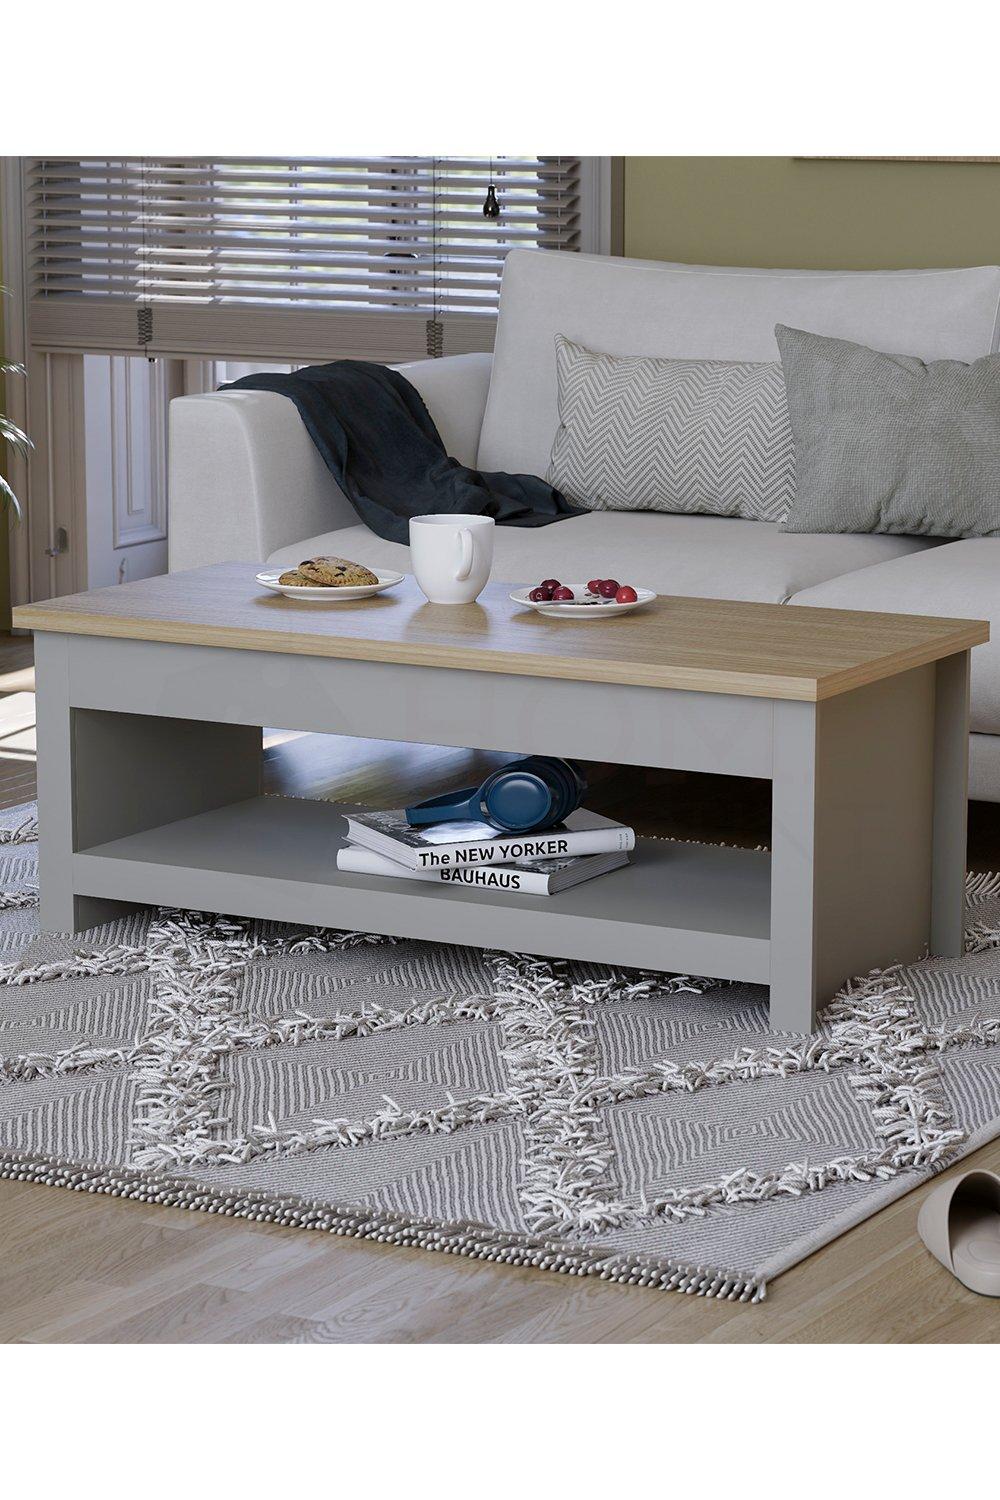 Vida Designs Arlington Coffee Table Shelf Storage Living Room